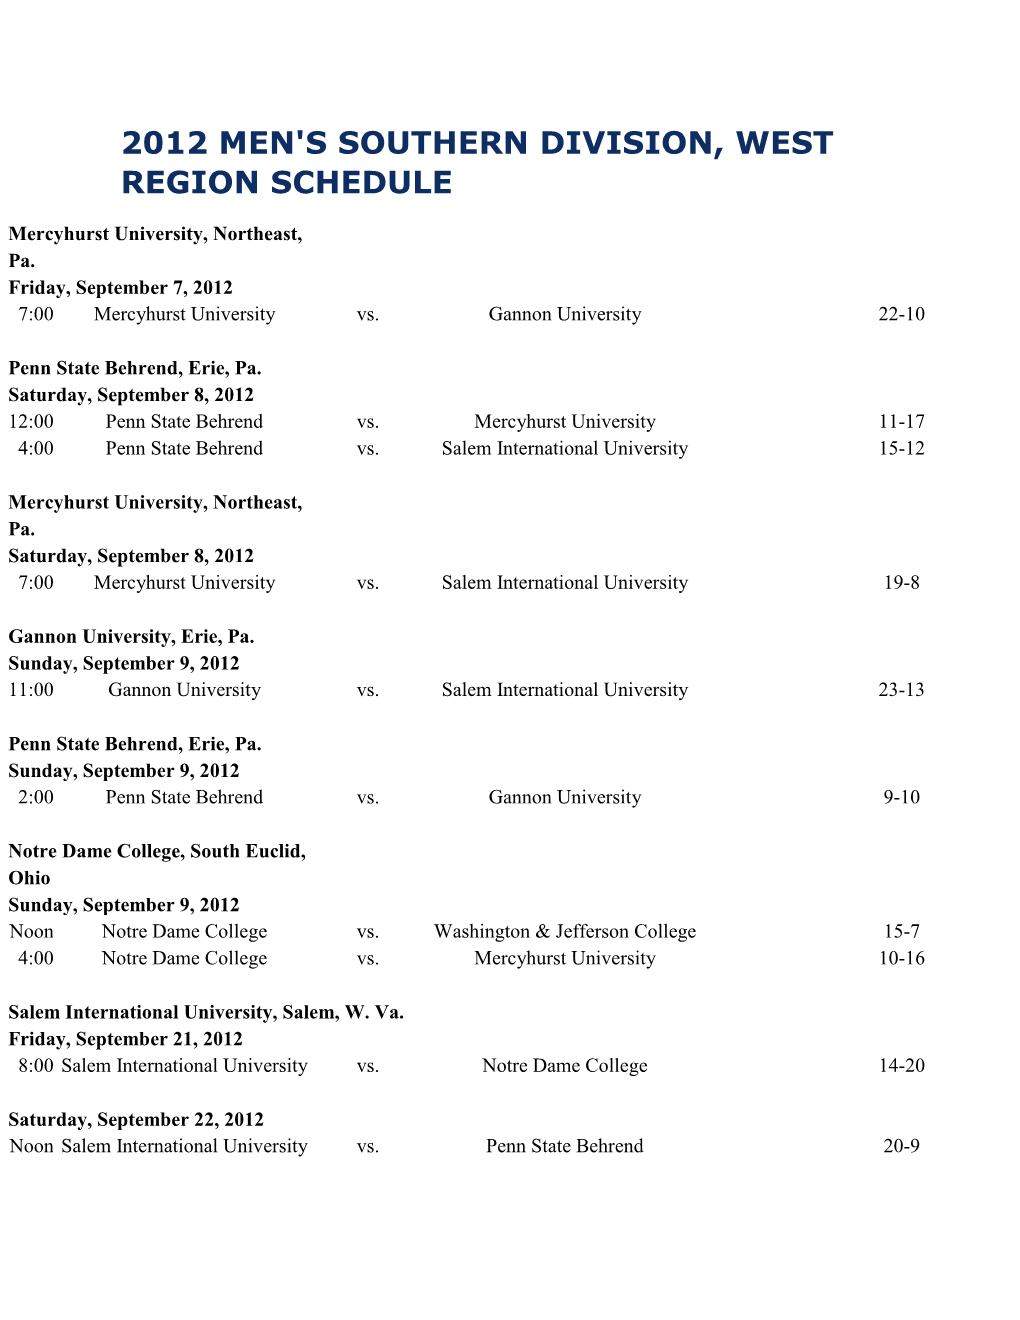 2012 Men's Southern Division, West Region Schedule